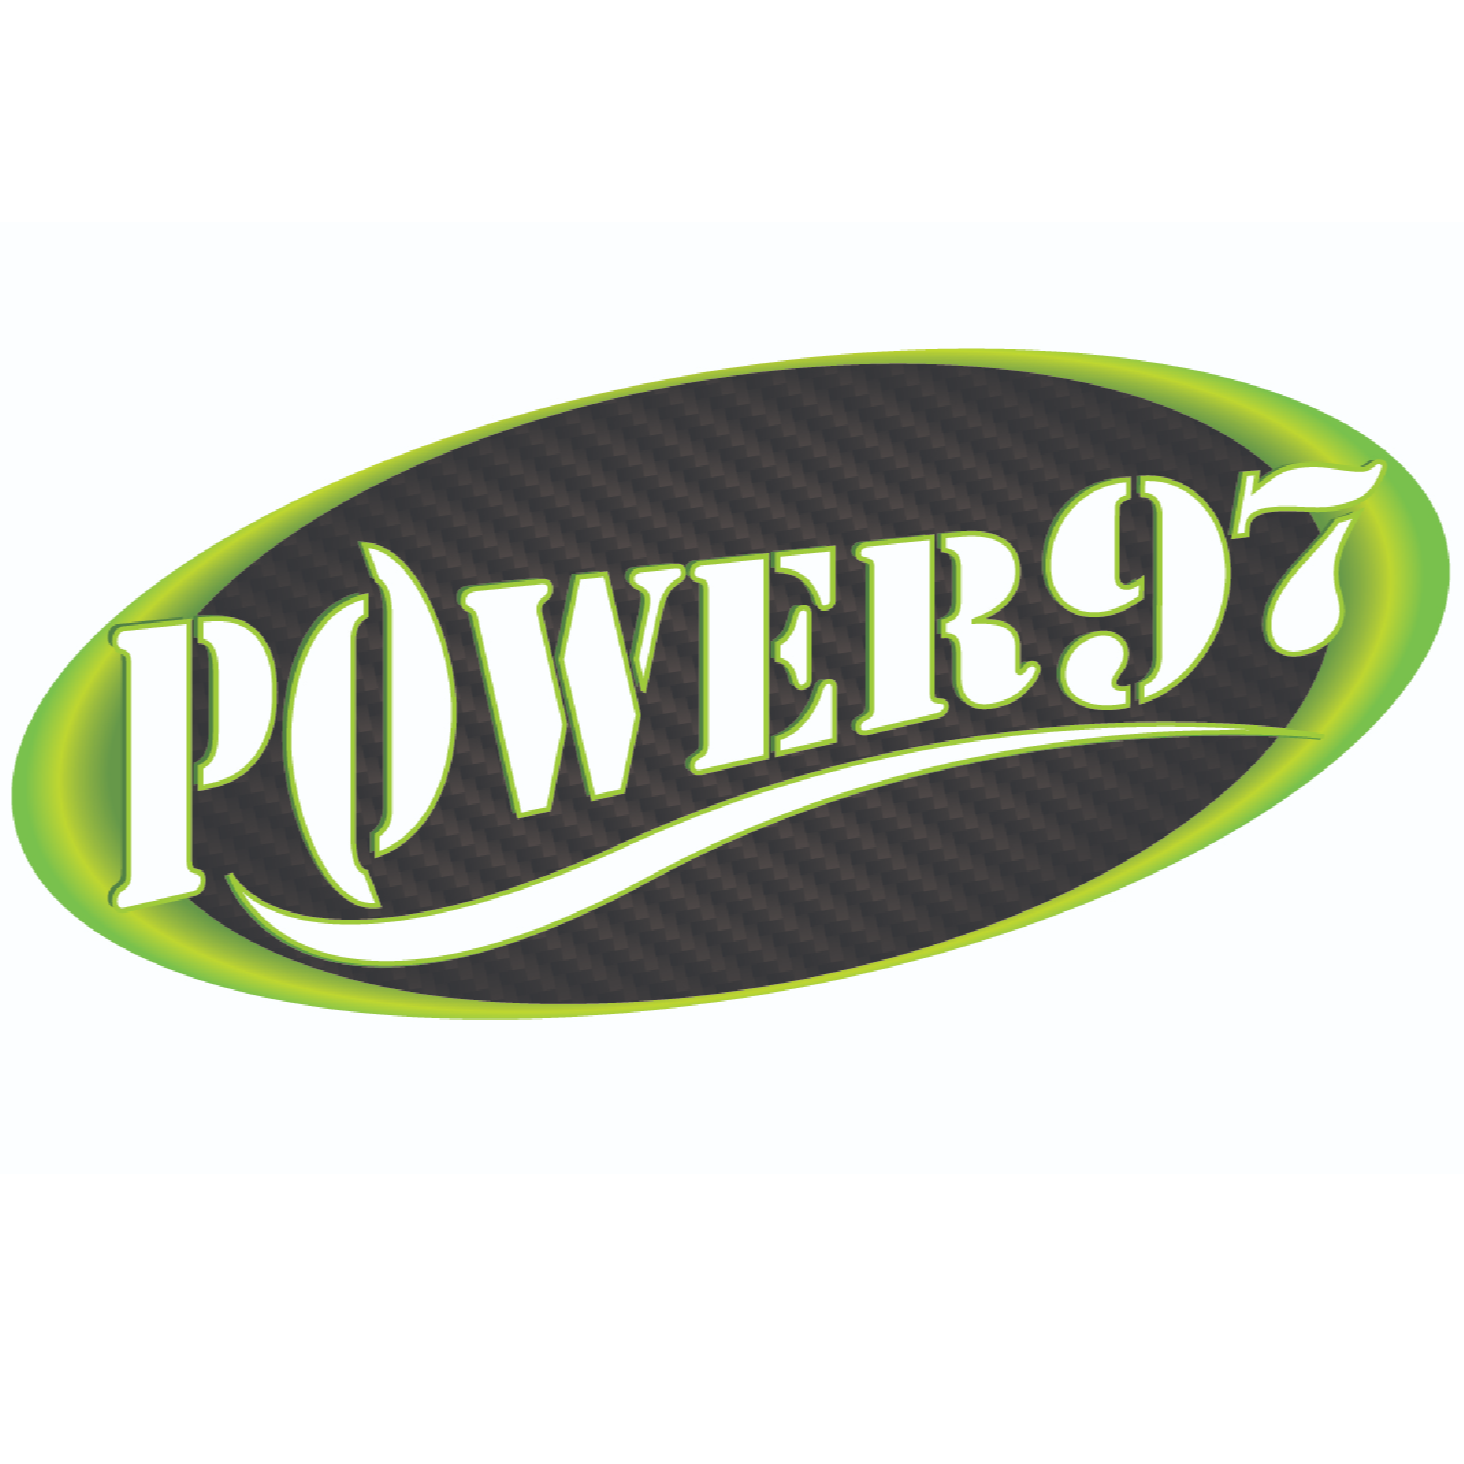 Power97